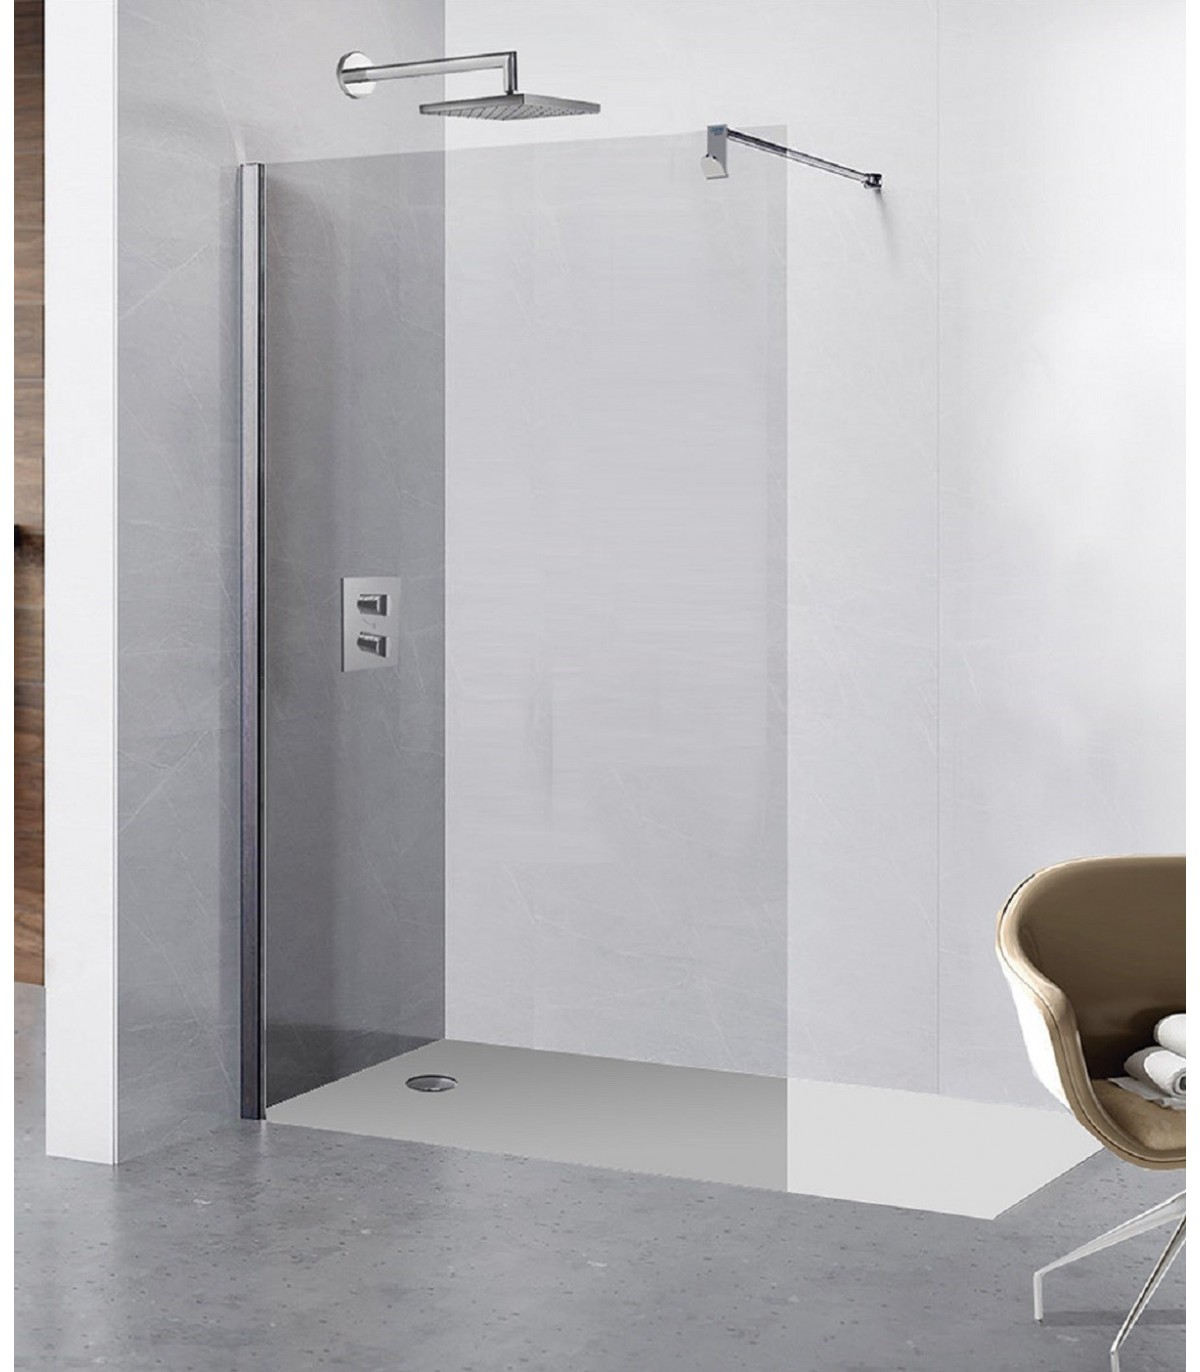 GME Mampara de ducha fija + brazo Screen (An x Al: 78 x 195 cm, Vidrio  transparente, Espesor: 8 mm, Negro)